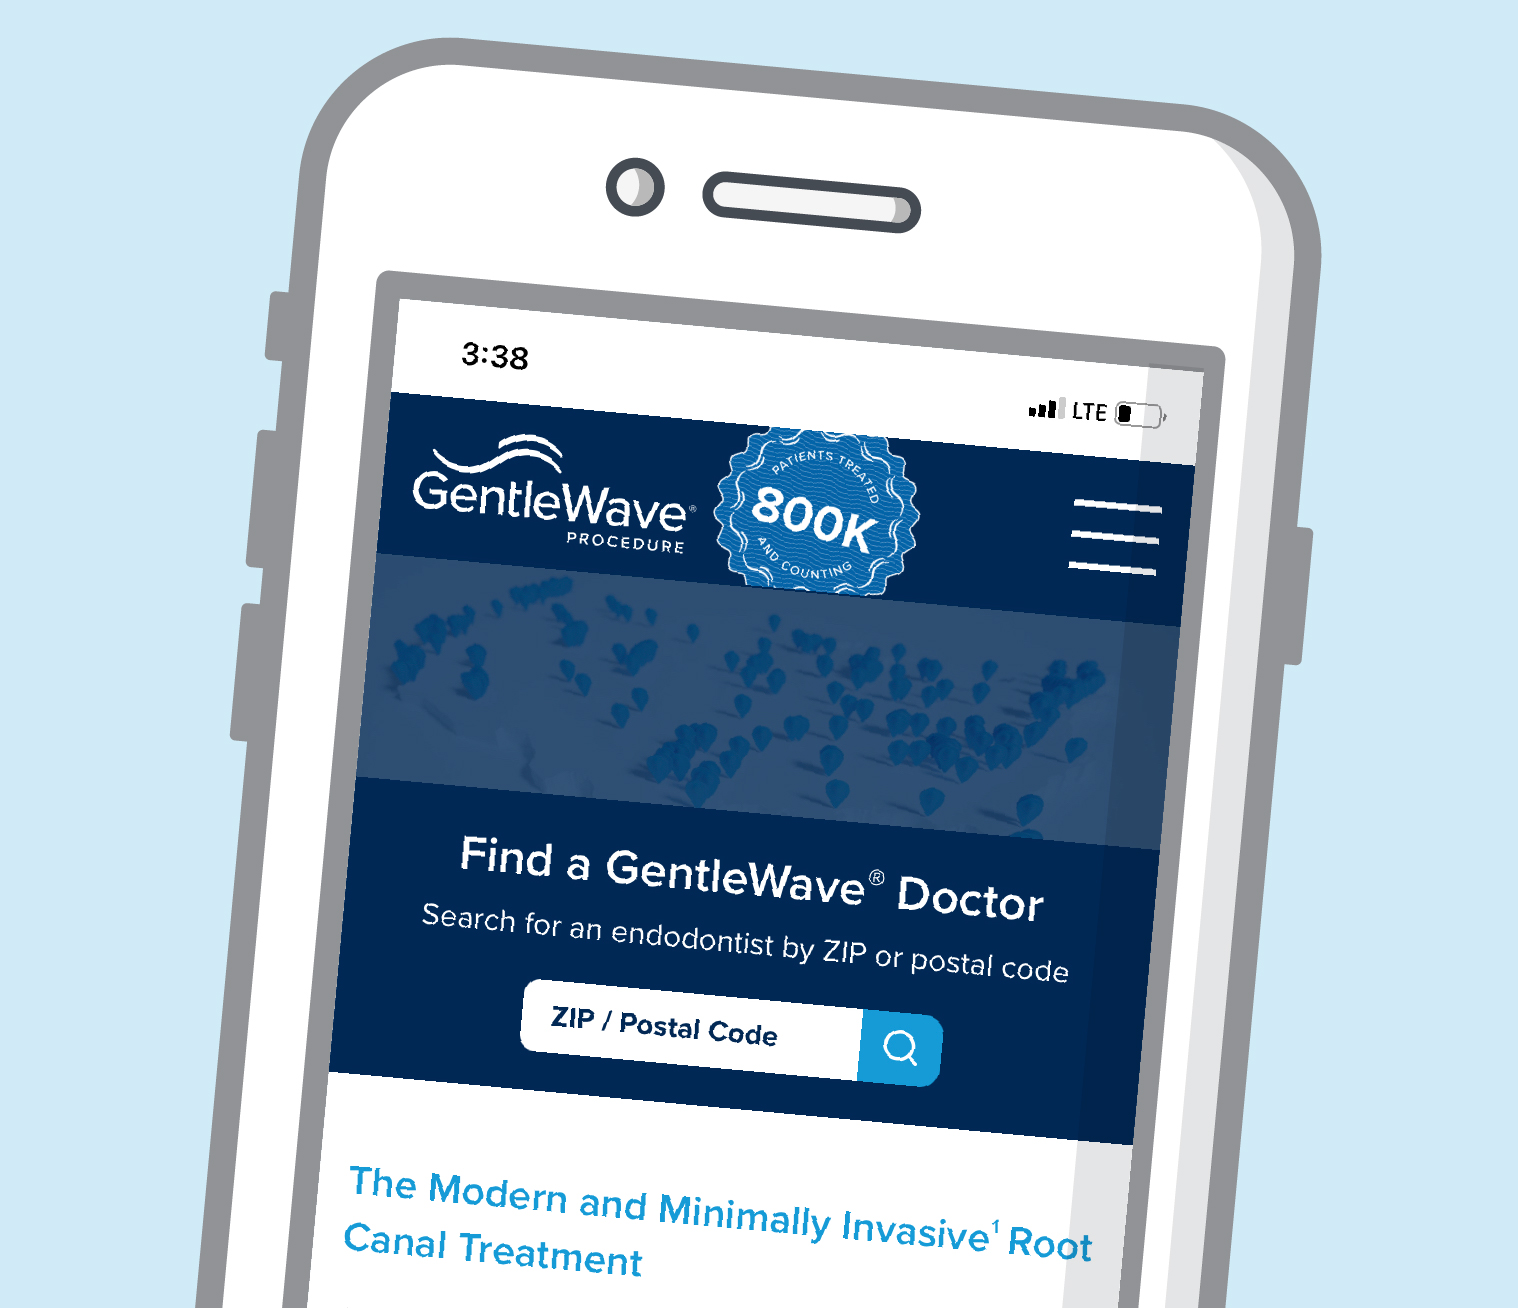 Find a GentleWave Doctor